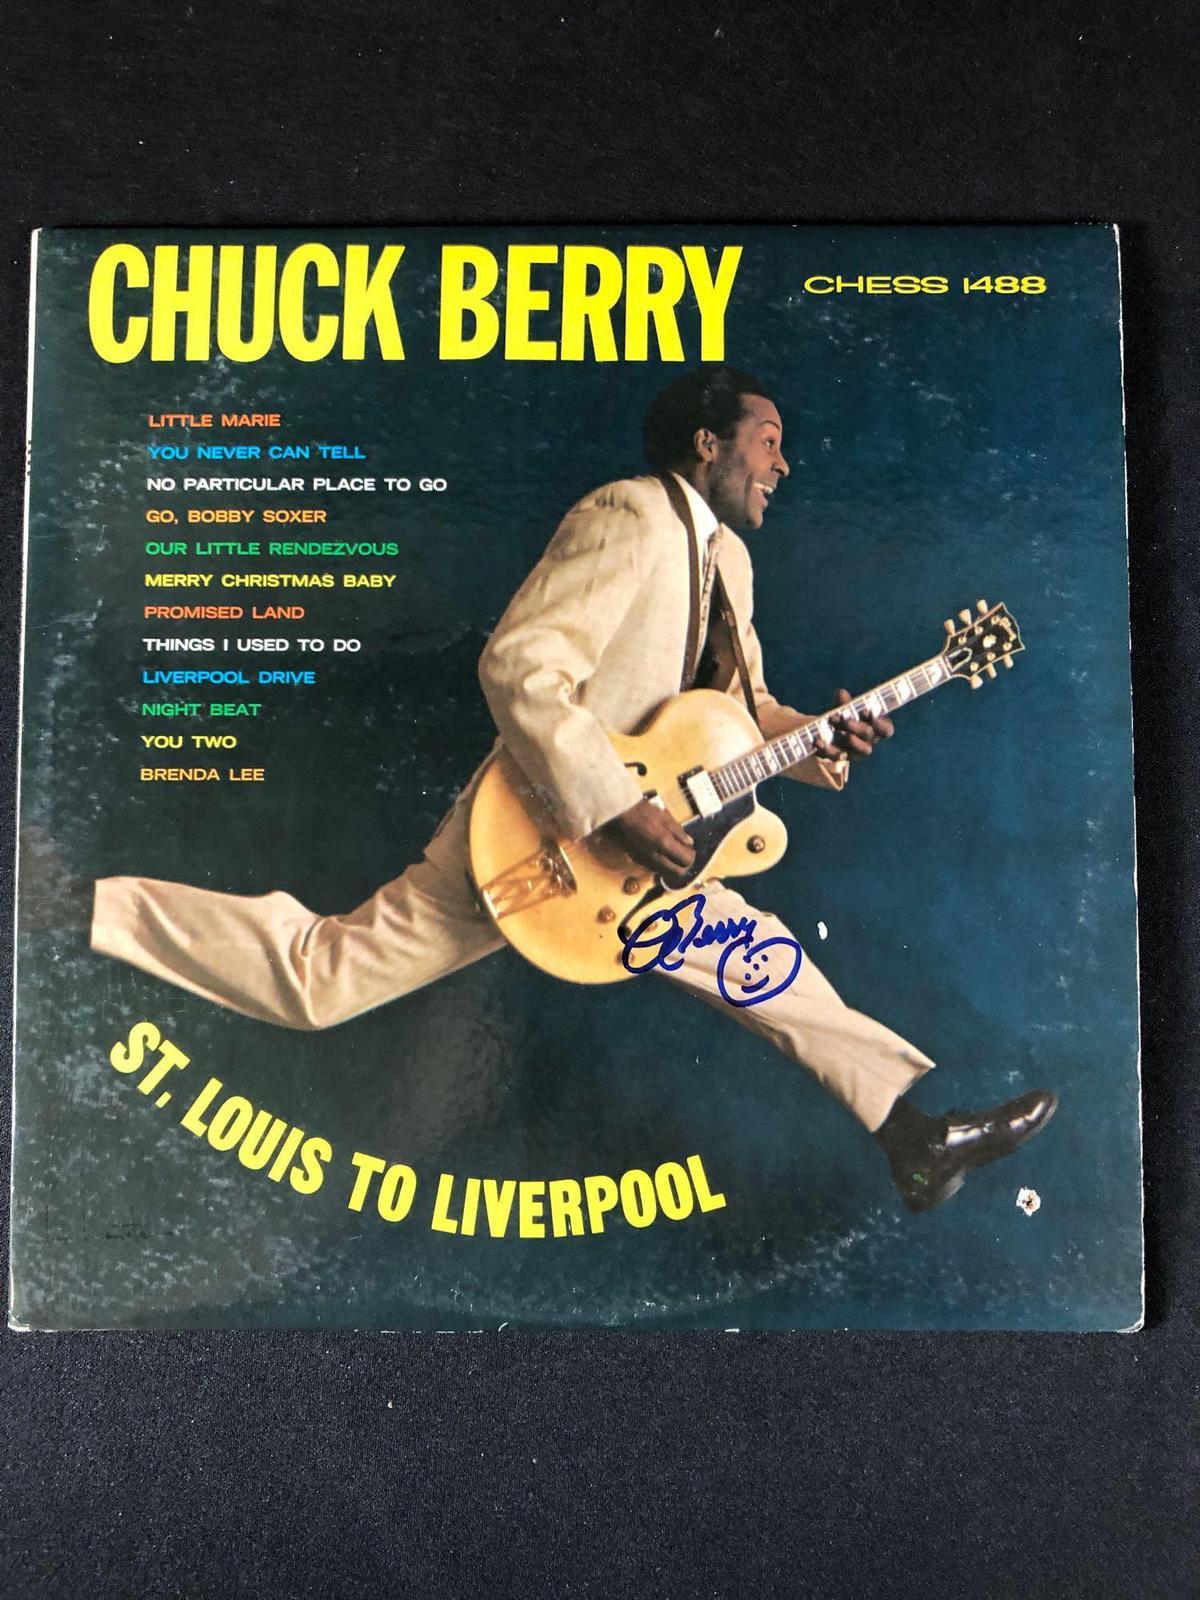 Chuck Berry "St. Louis To Liverpool" Autographed Album